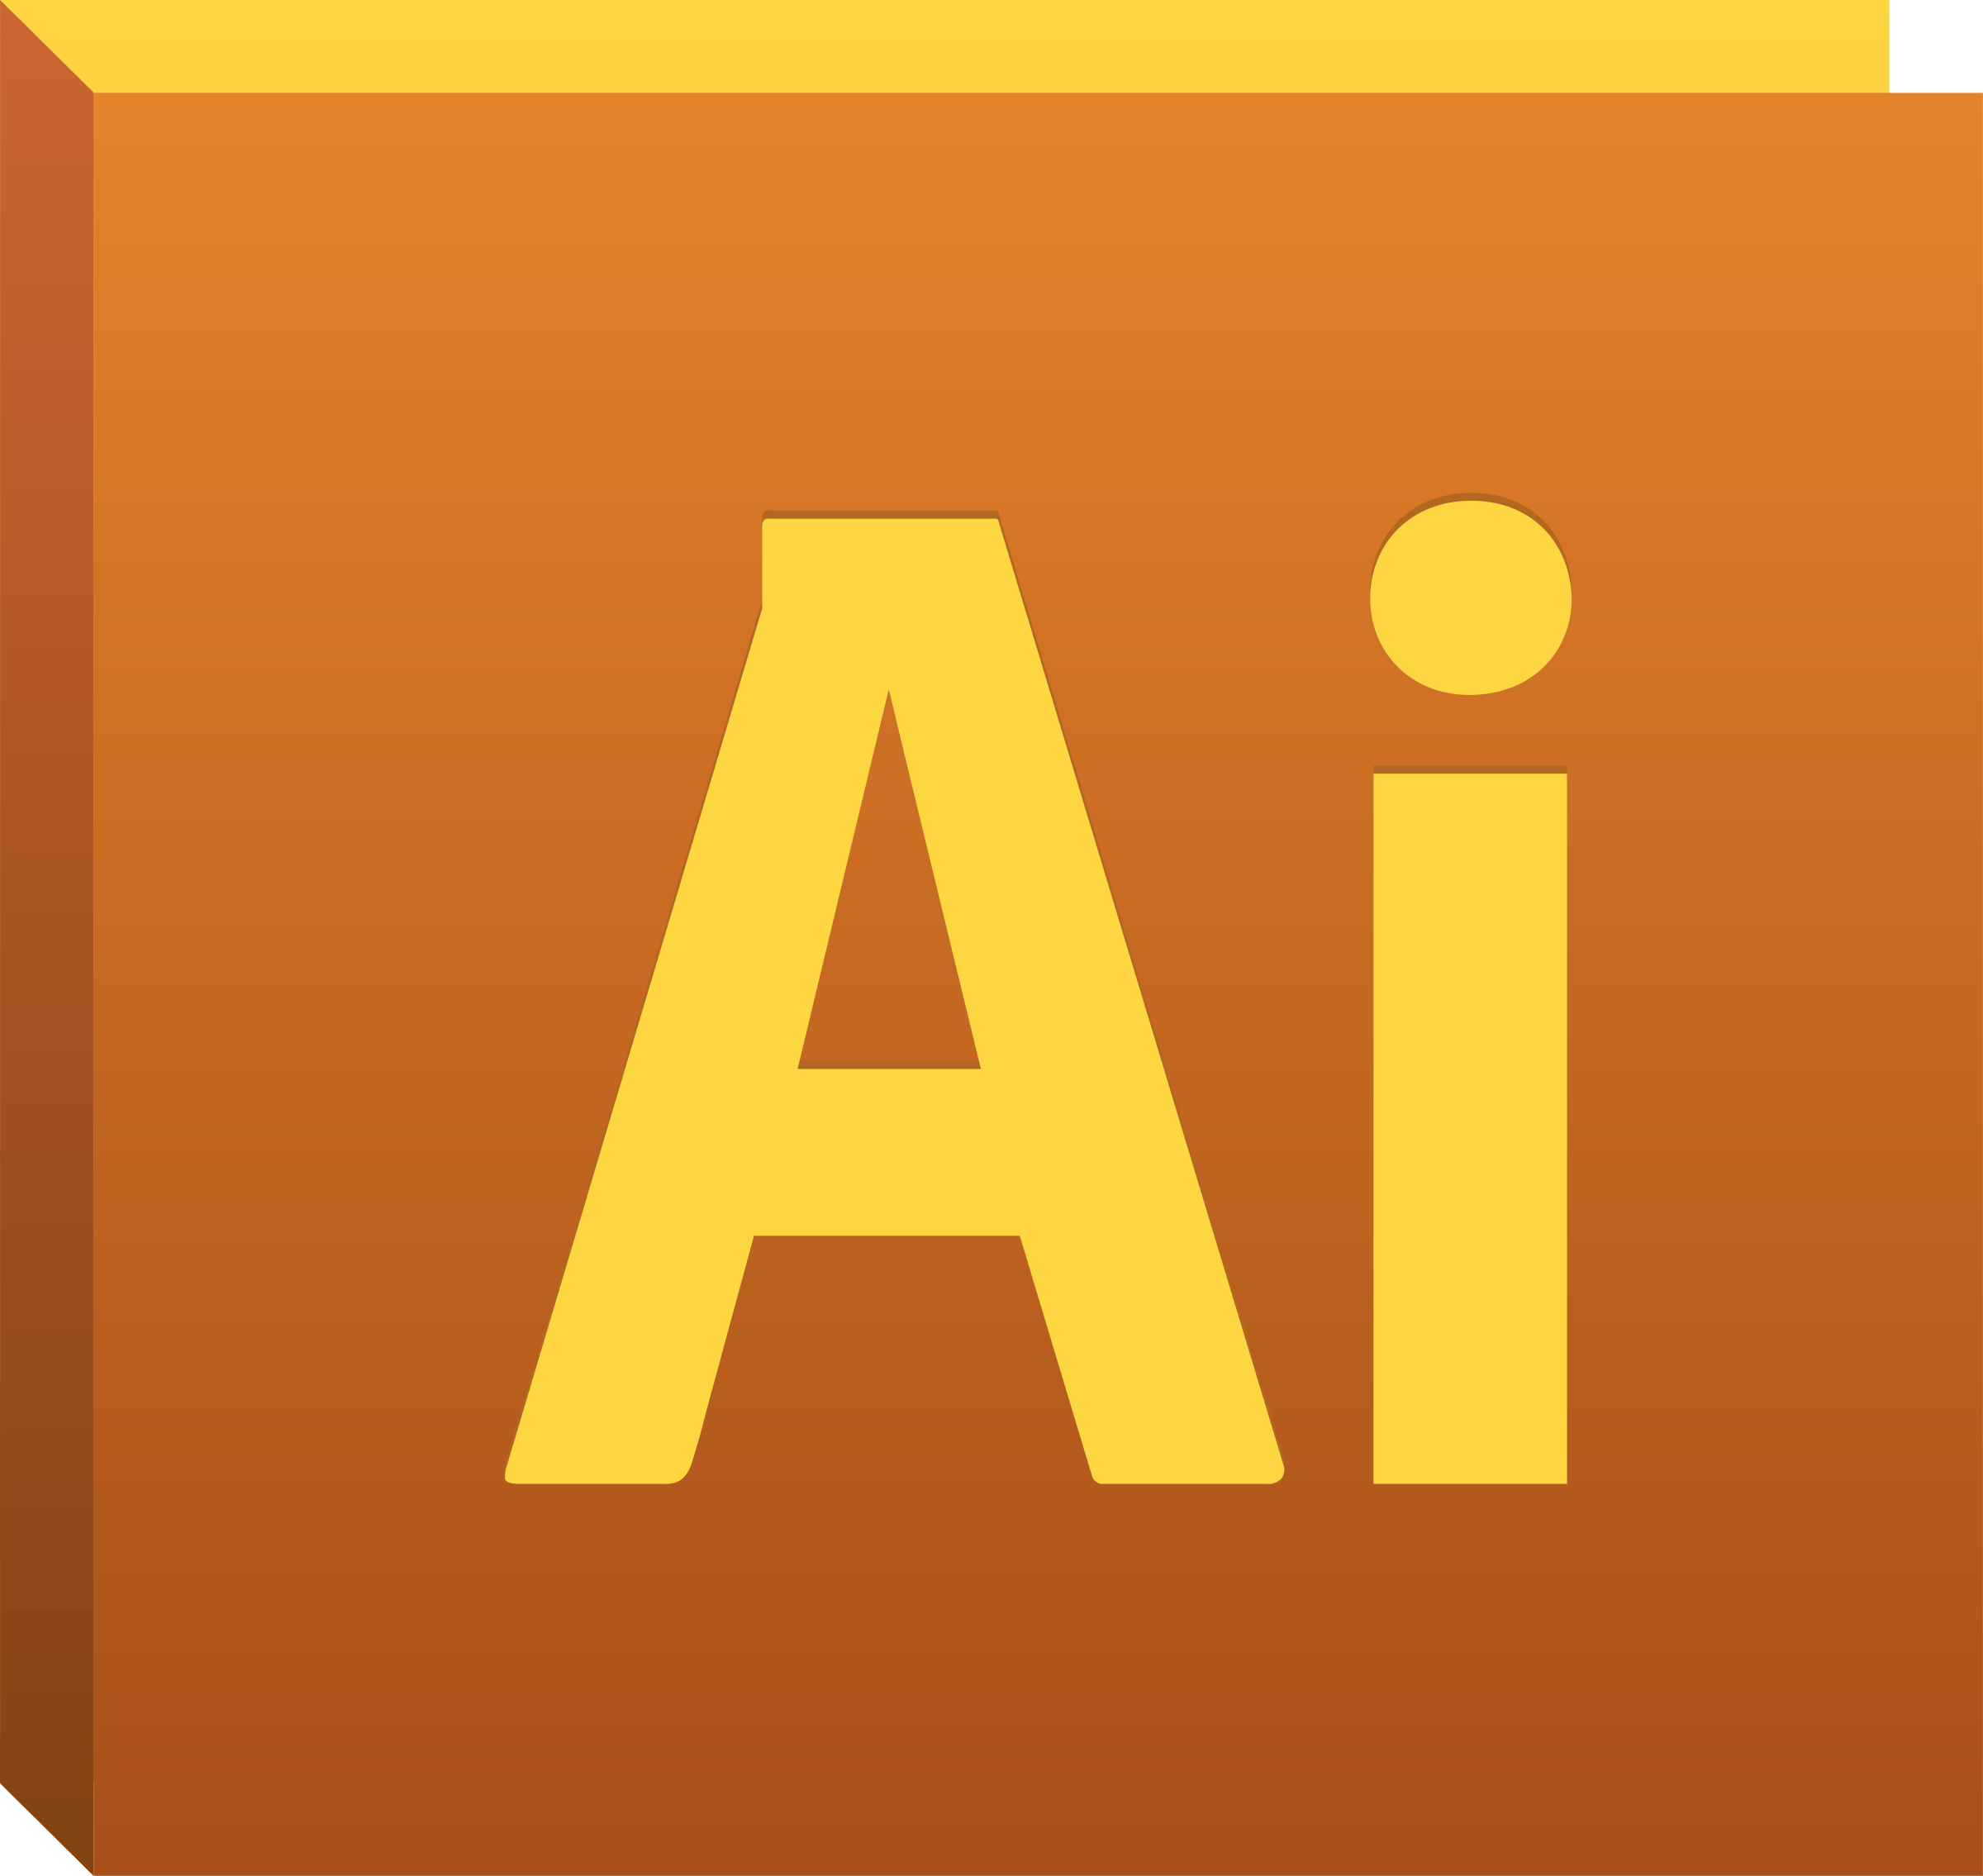 Adobe Illustrator Logo - Adobe Illustrator CS5 Logo PNG Transparent & SVG Vector - Freebie Supply